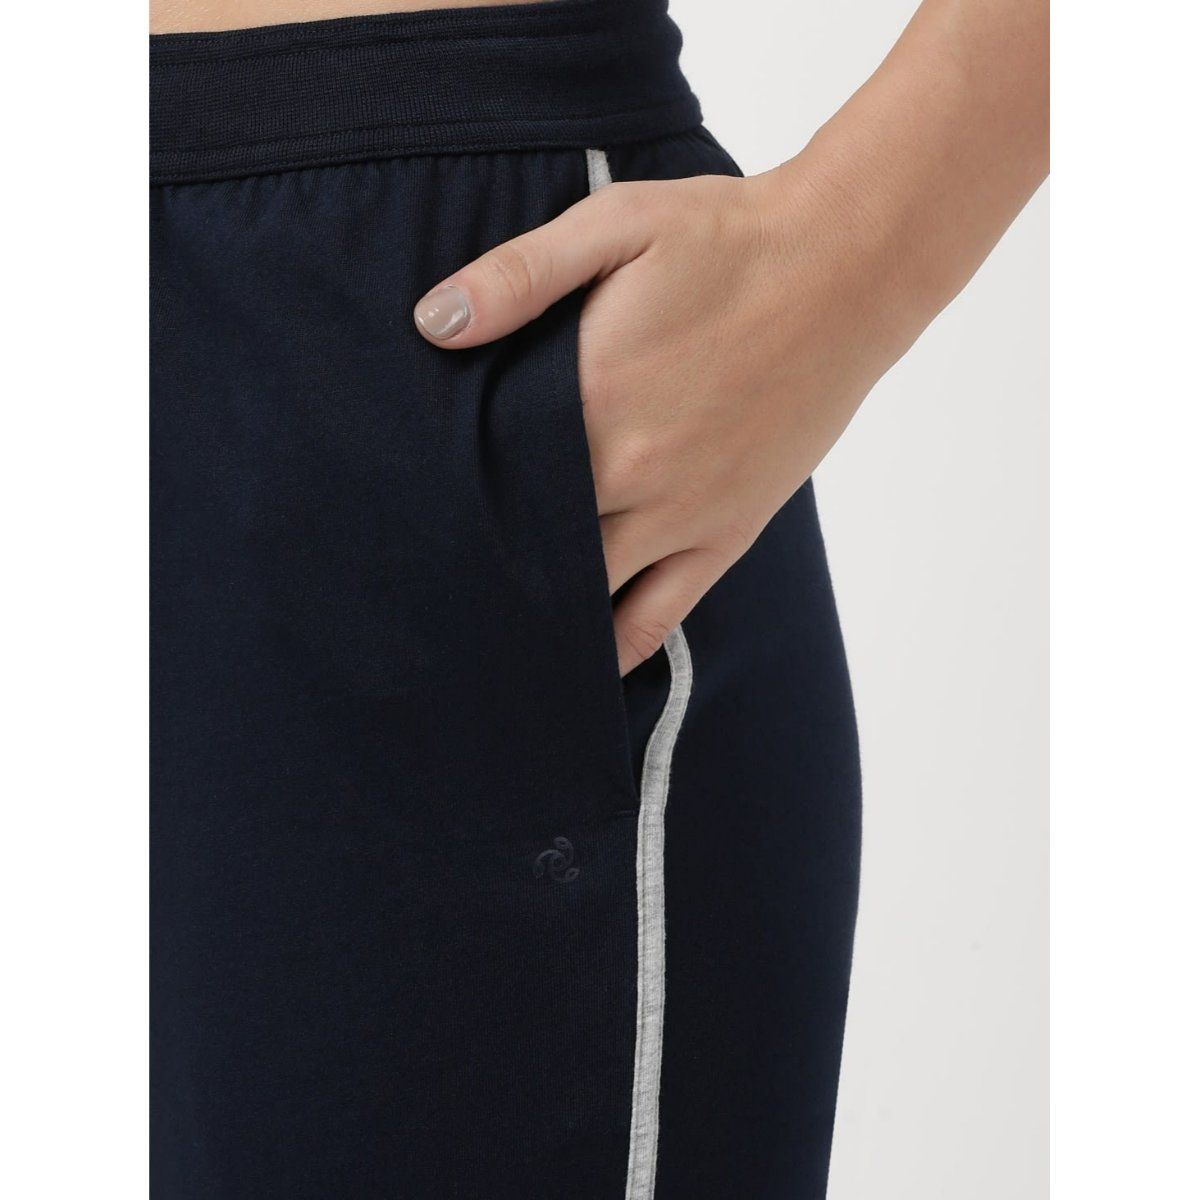 Jockey Lingerie  Jockey Iris Blue Assorted Prints Knit Lounge Pants   Style Number  RX09 Online Nykaa Fashion